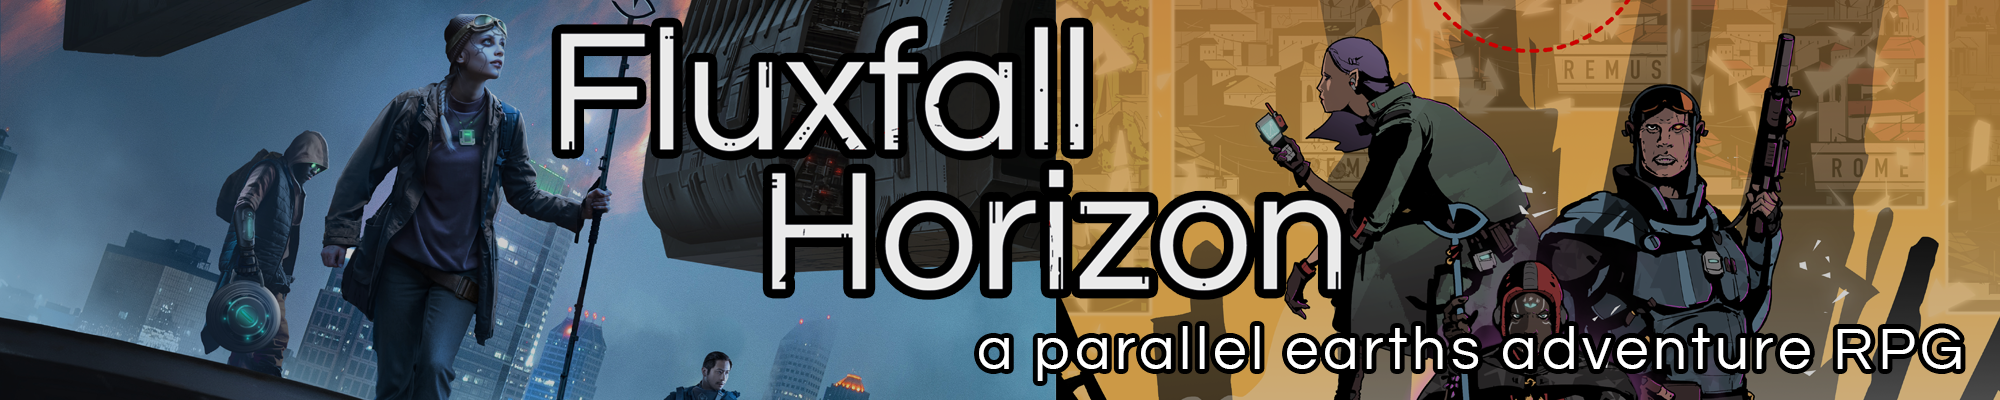 Fluxfall Horizon